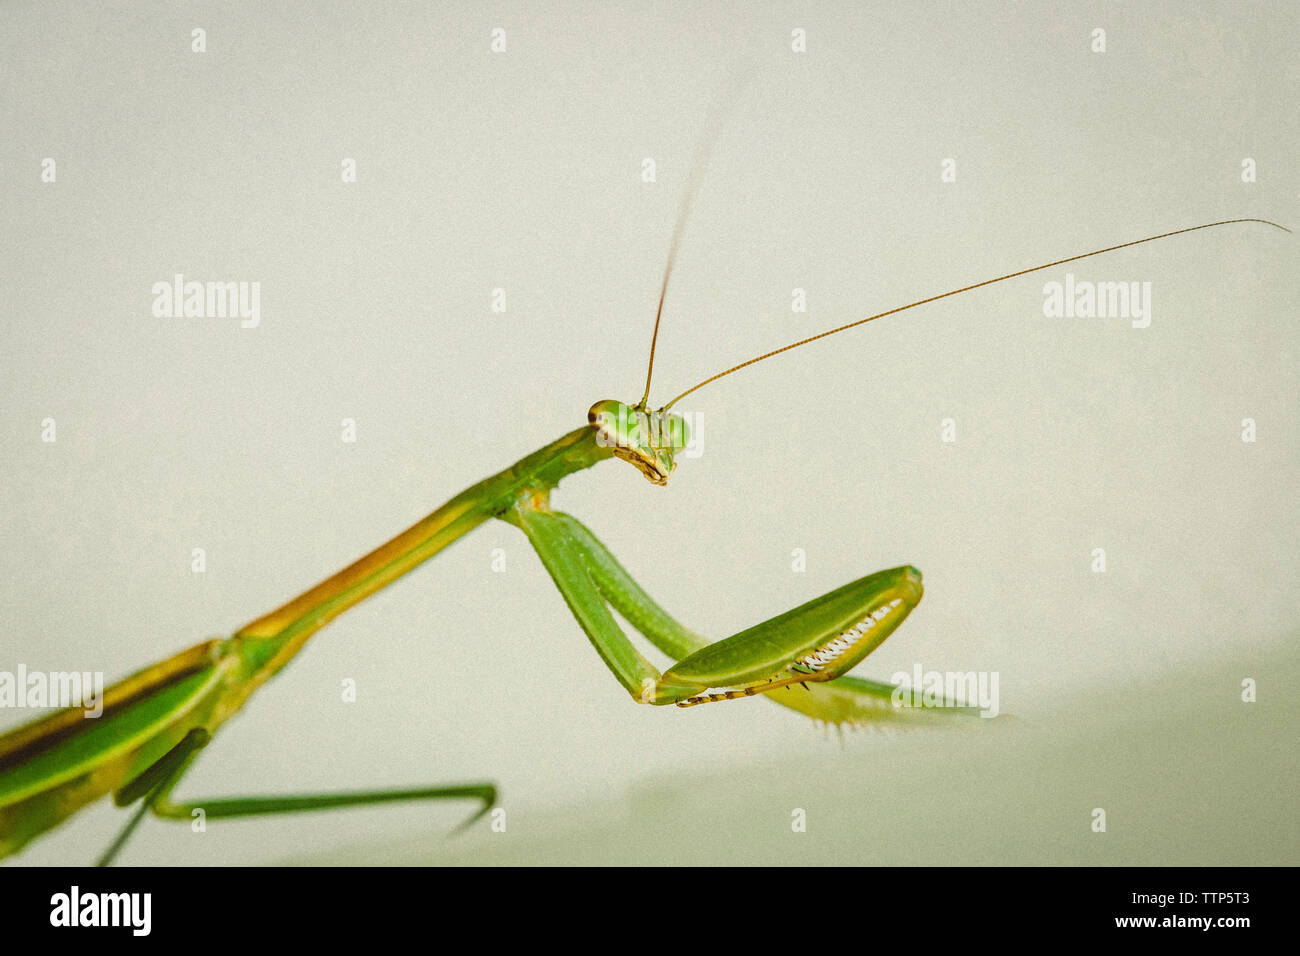 Close-up of grasshopper on white background Stock Photo